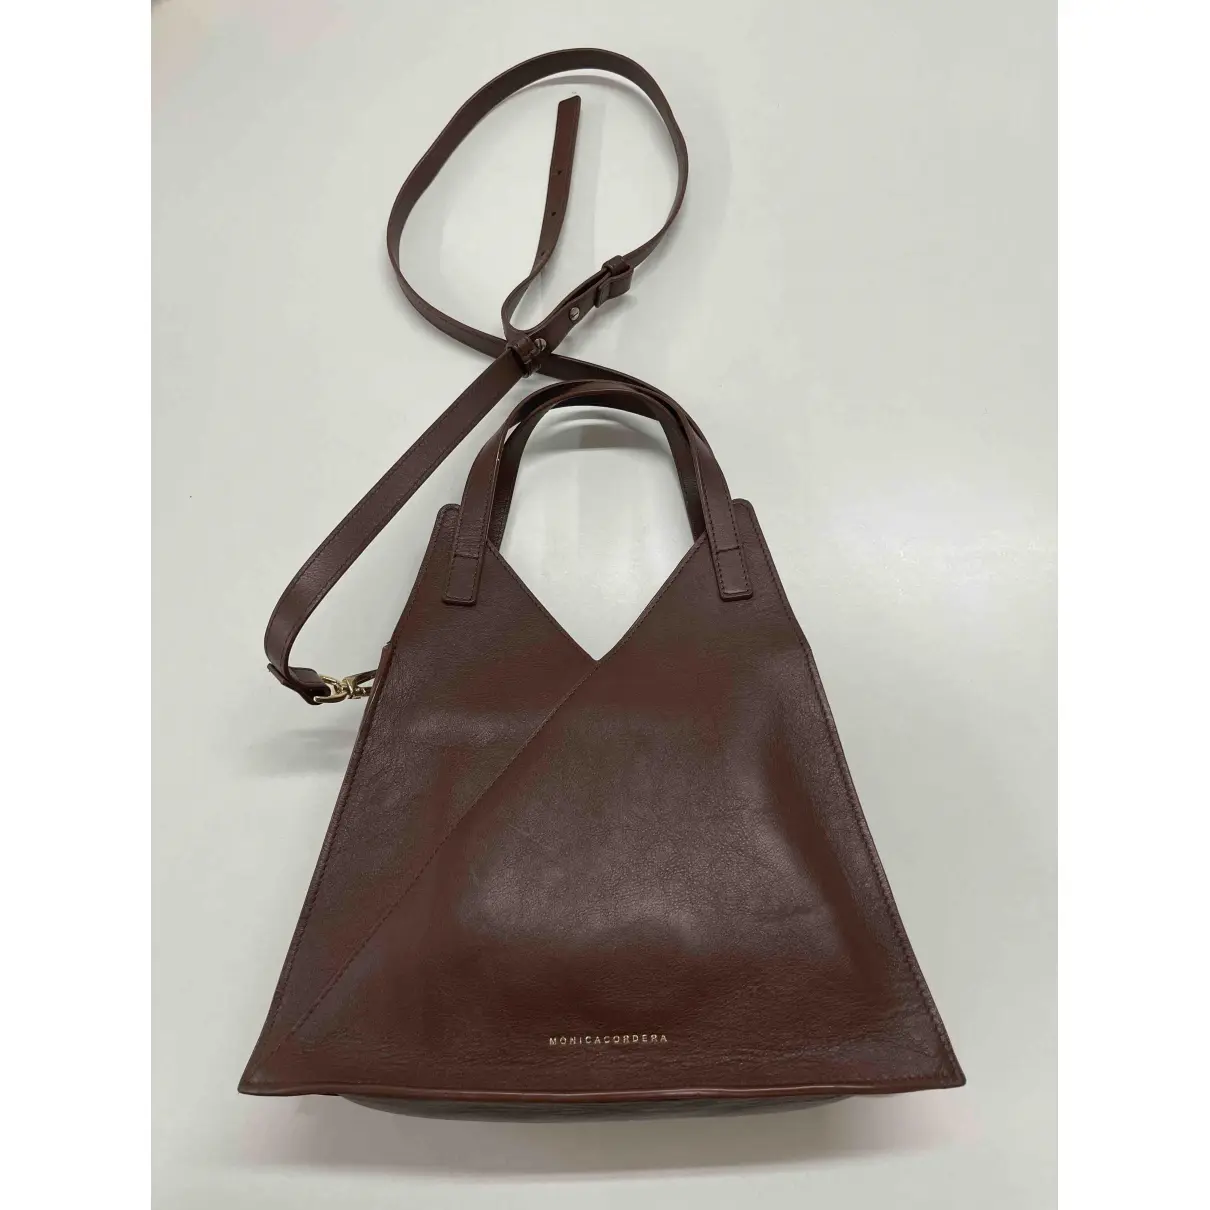 Buy Monica Cordera Leather handbag online